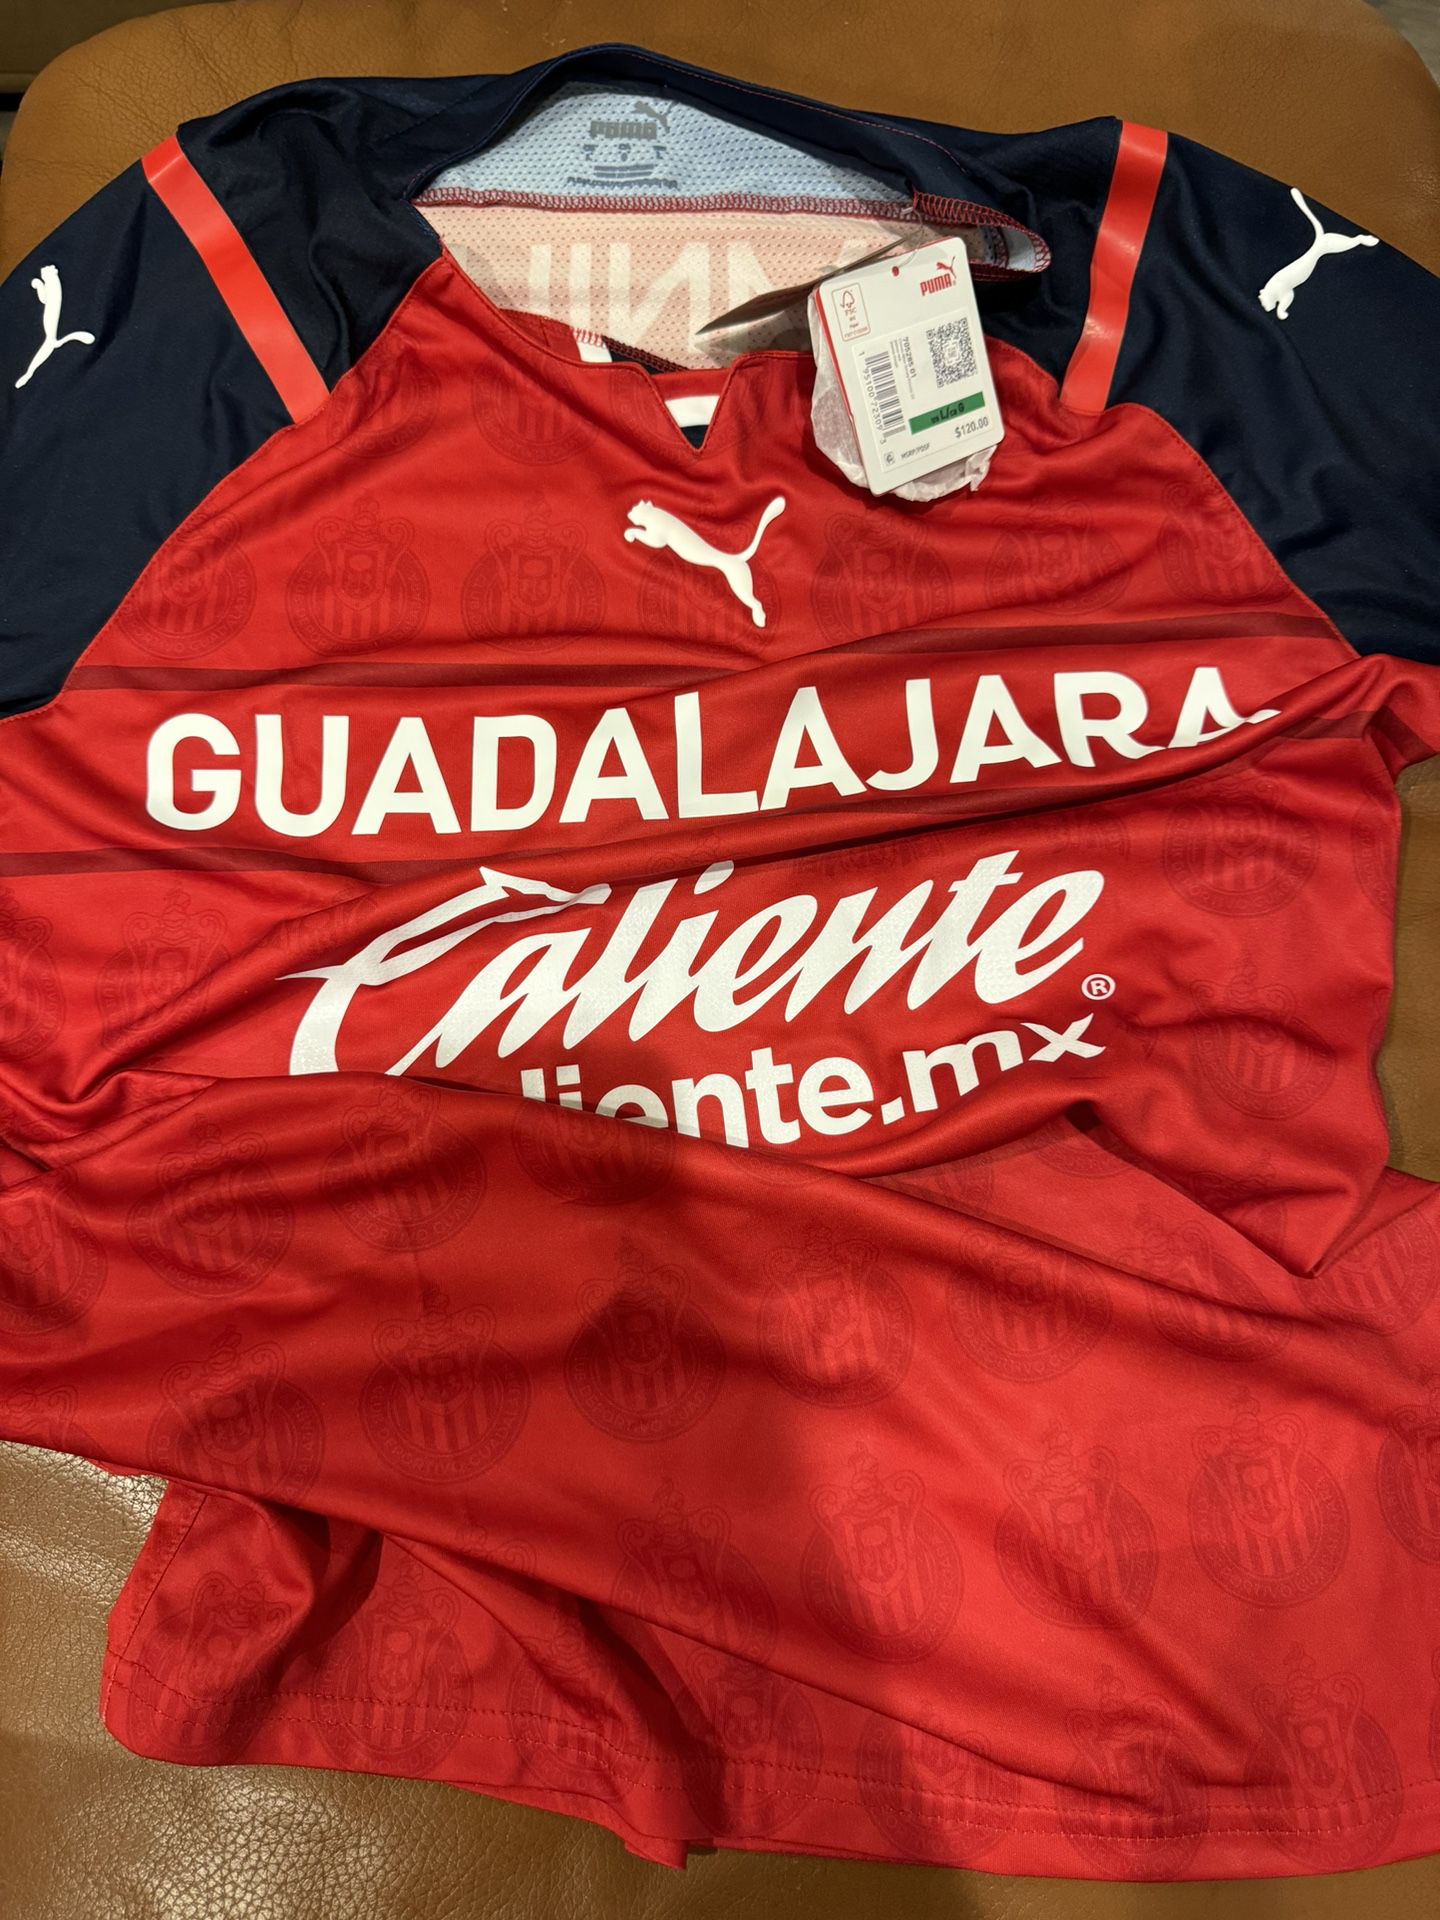 Puma Chivas Soccer Jersey Size Large Men New 